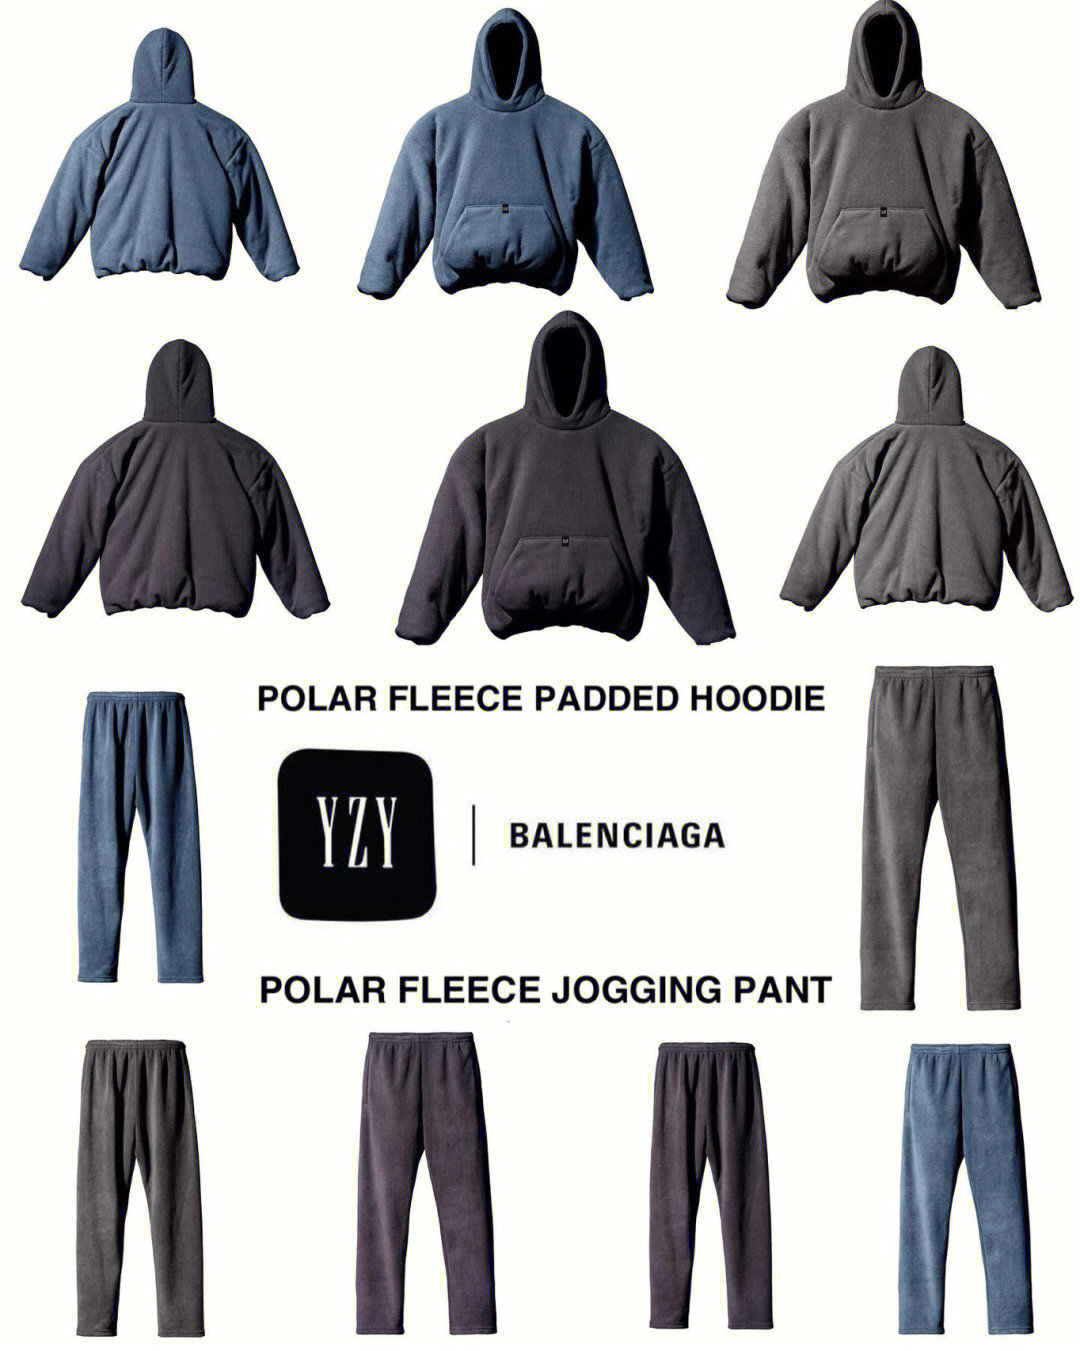 yeezy x gapyeezy gap polar fleece padded hoodie & jogging pant